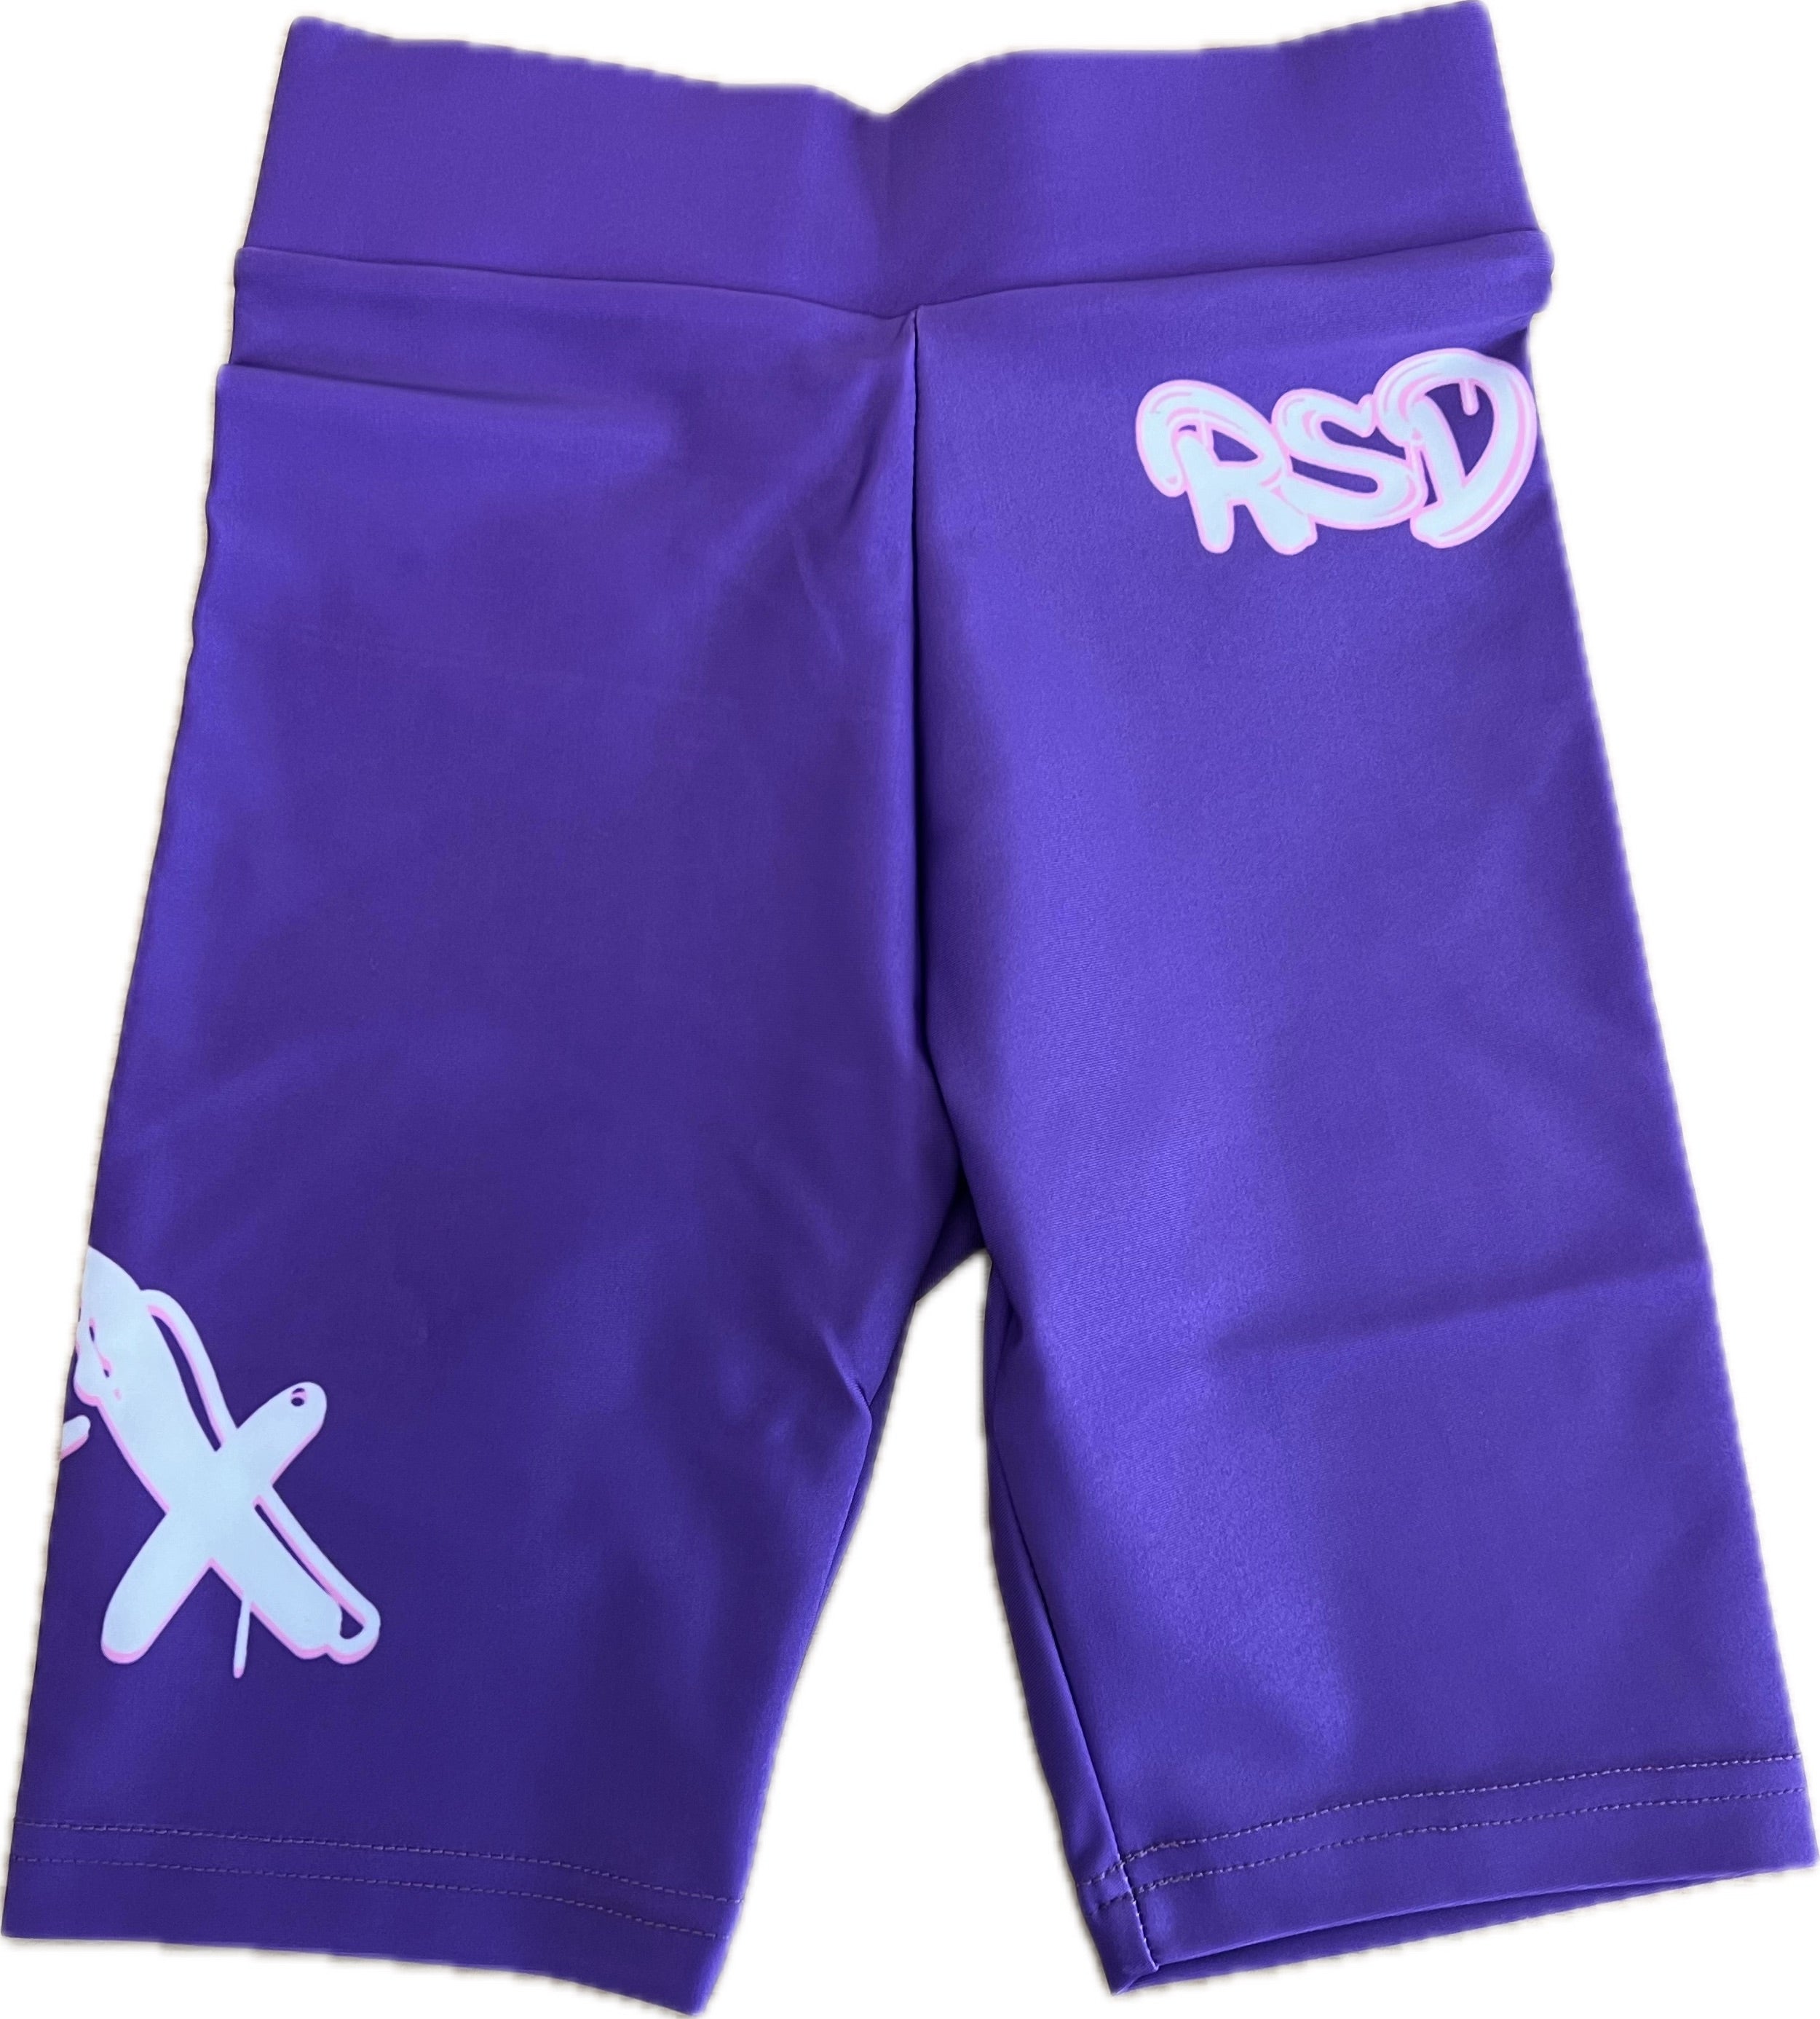 Purple Cycling Shorts - RSD